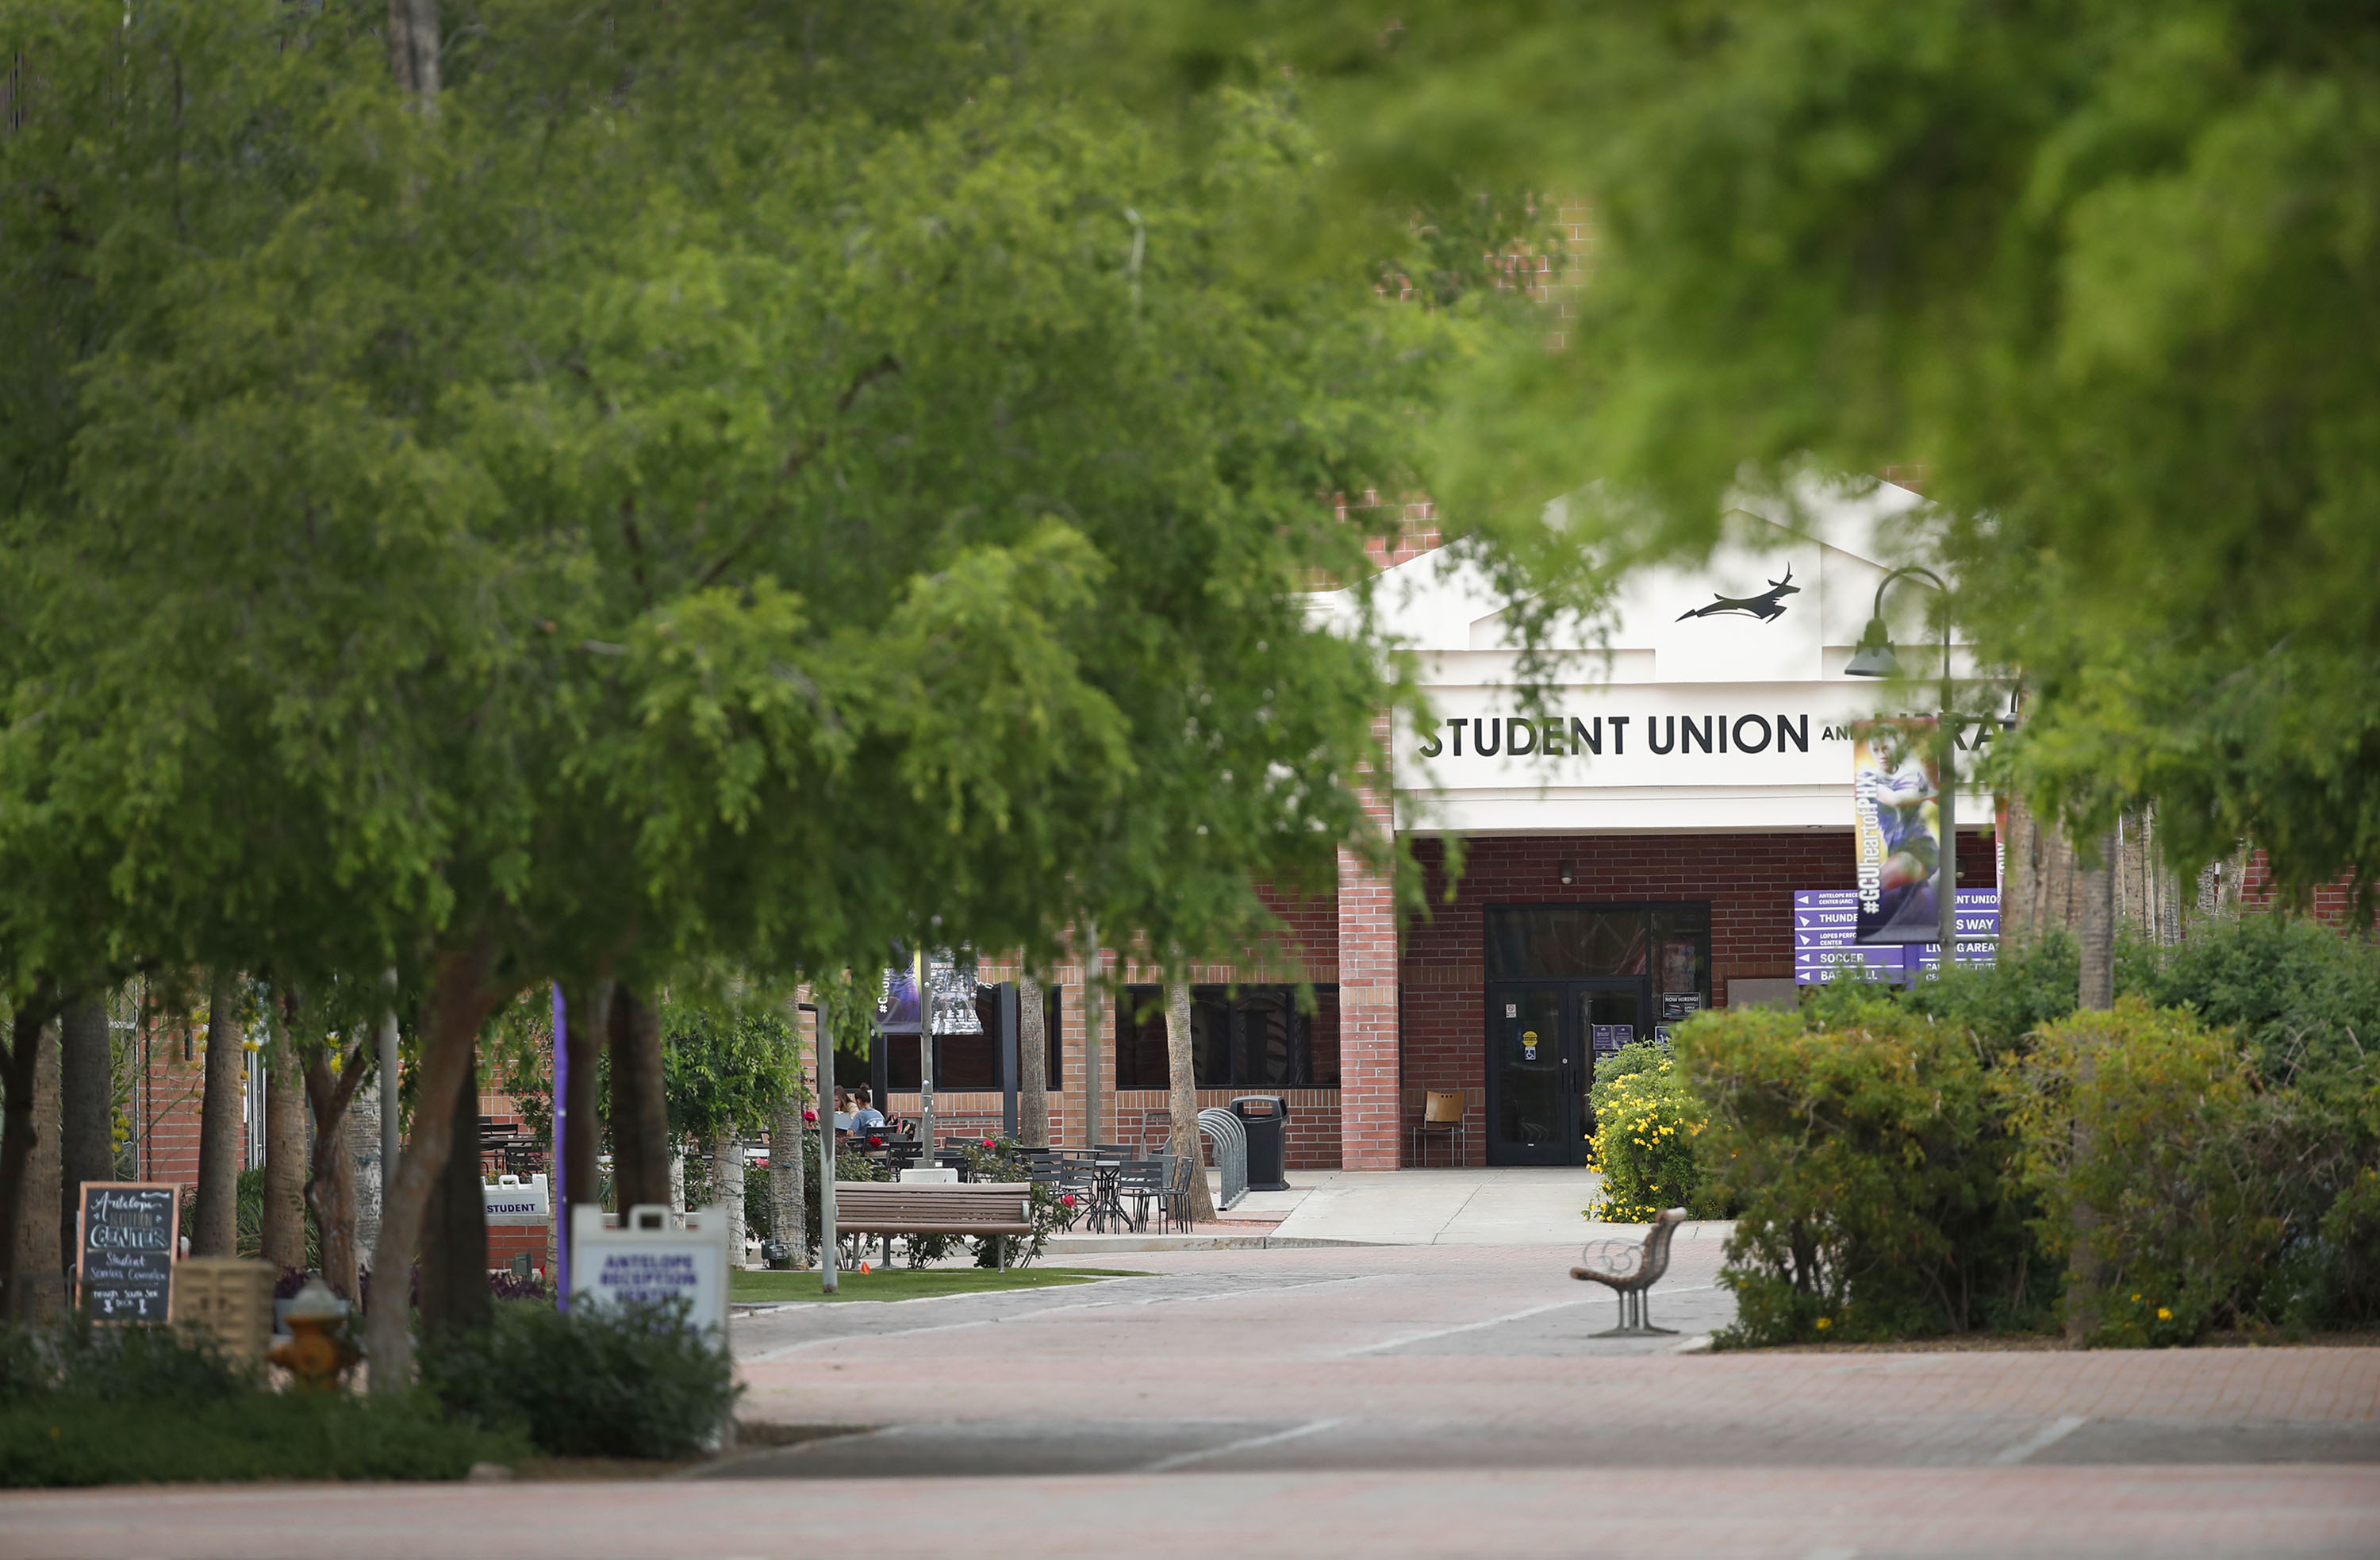 Slideshow: Beauty amid stillness of campus - GCU Today